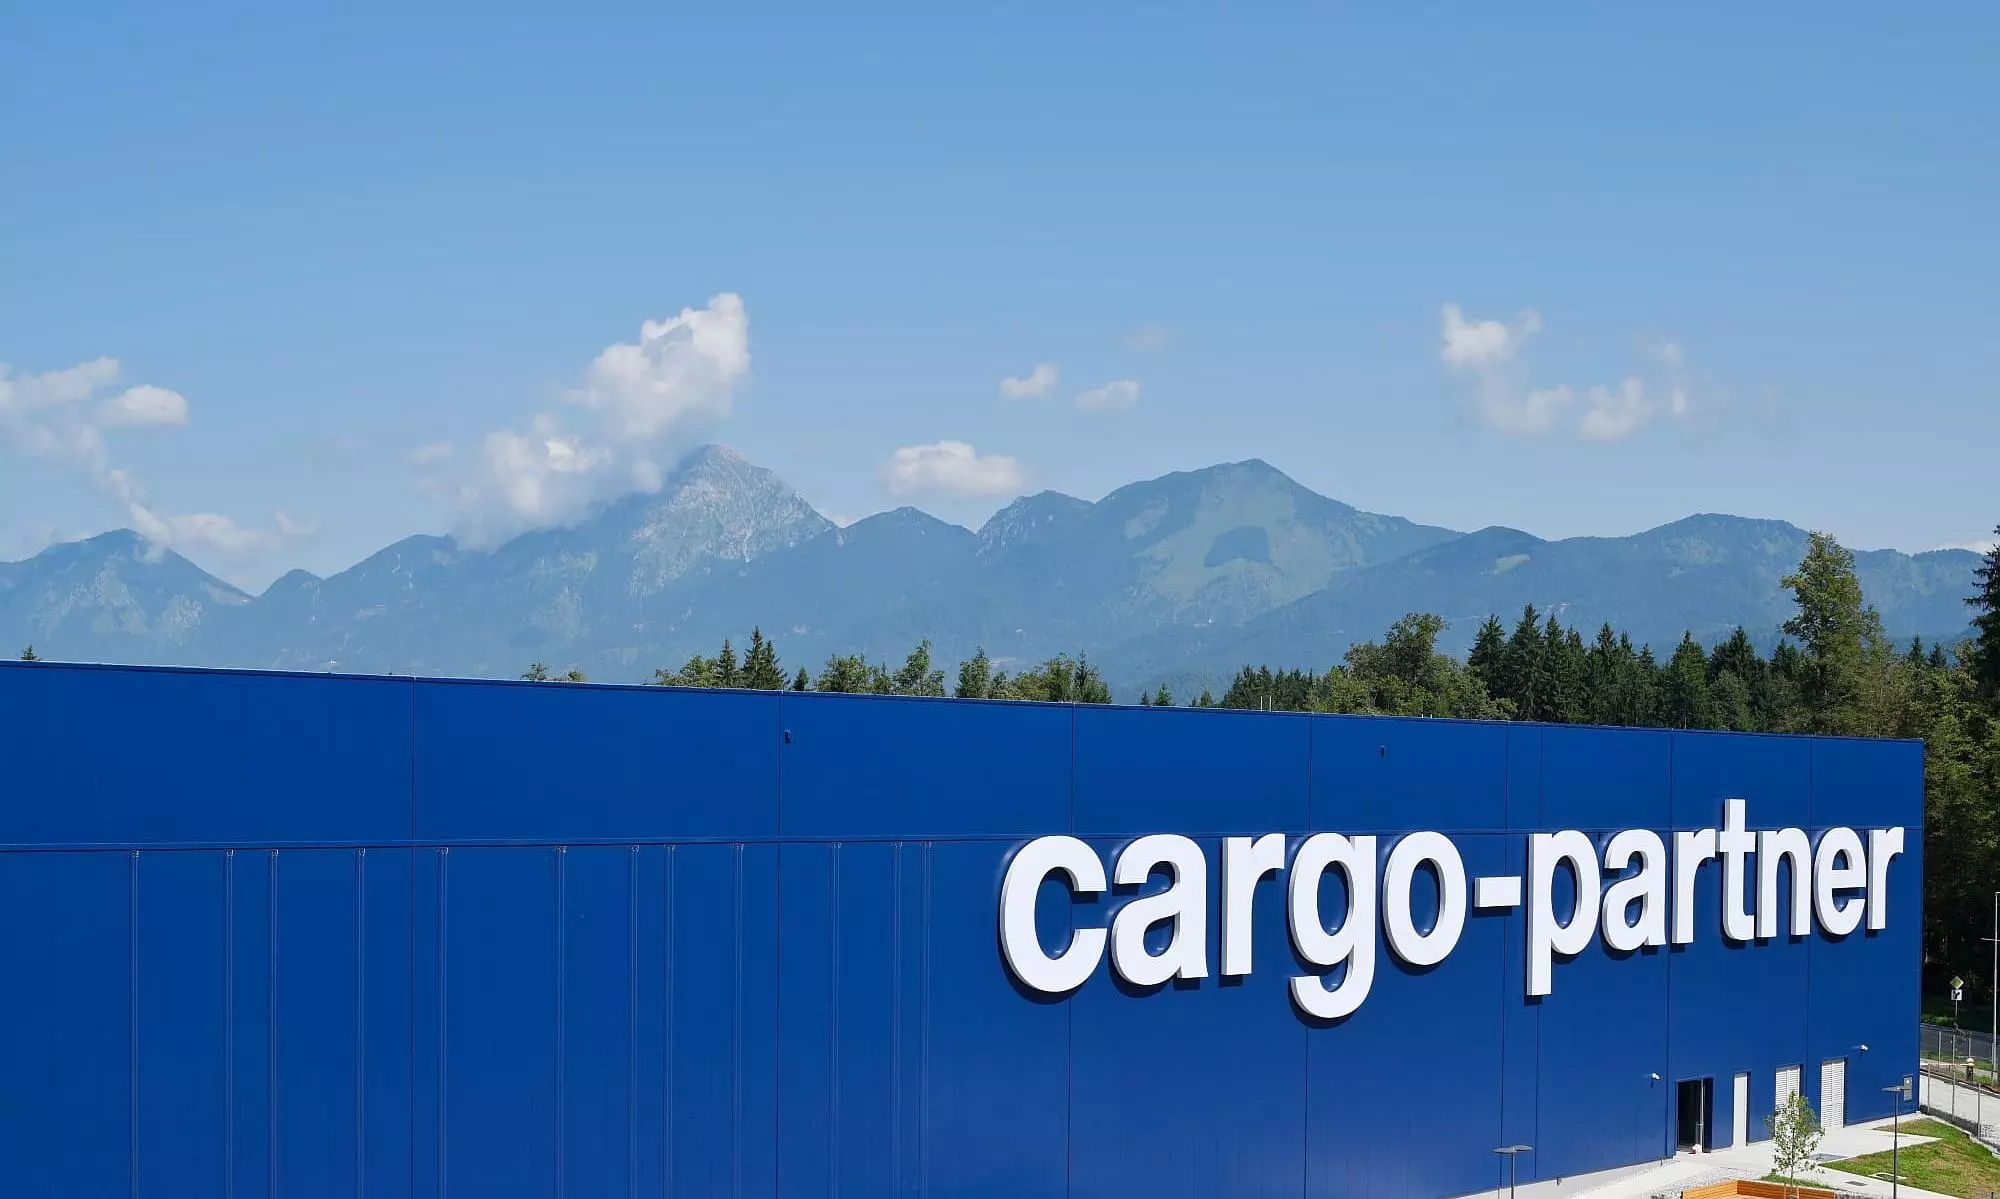 cargo-partner joins UN Global Compact